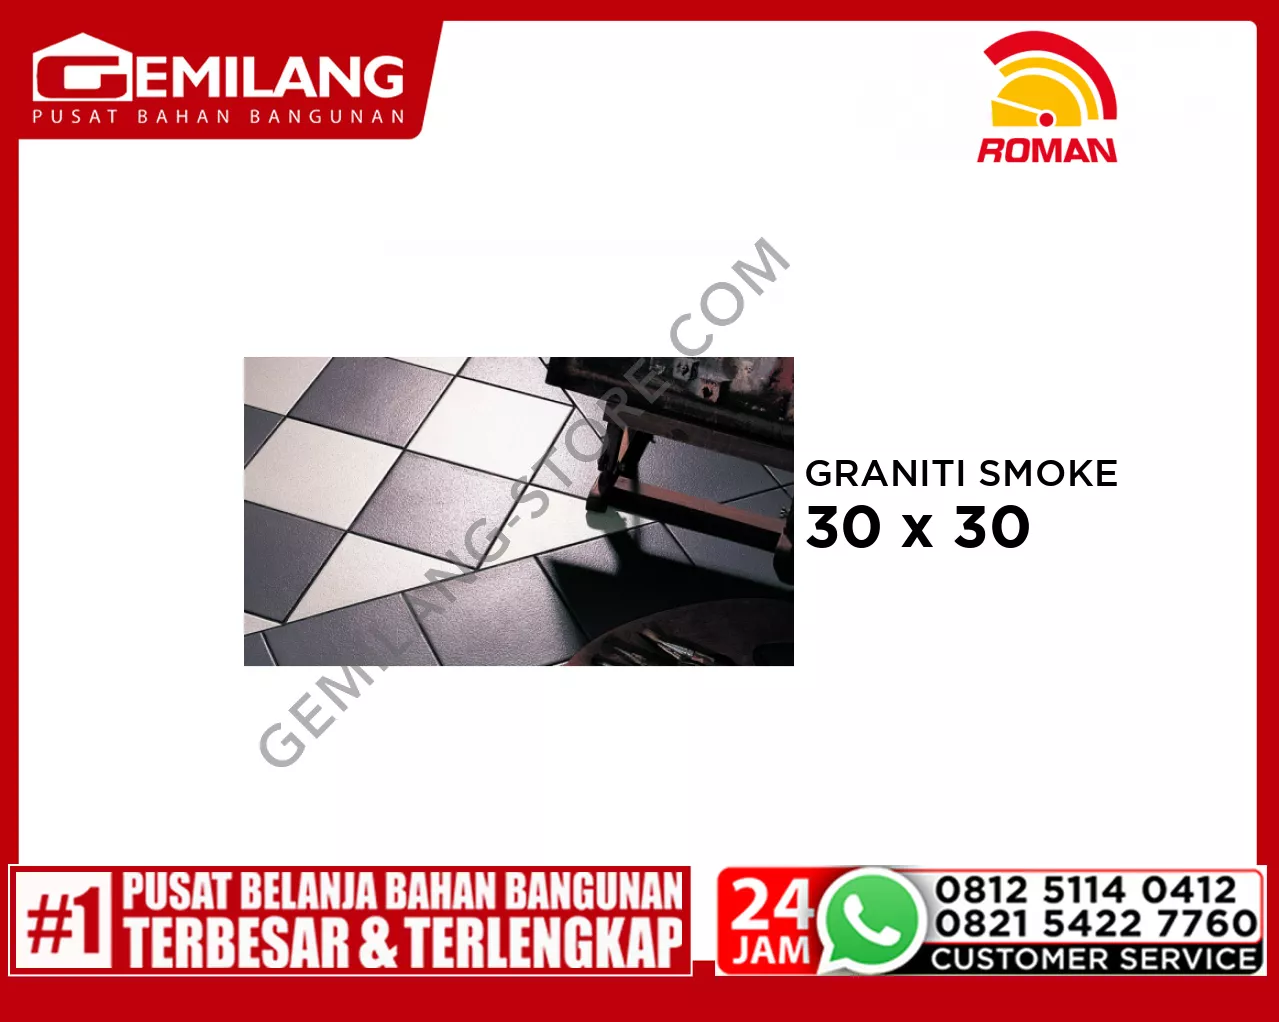 ROMAN GRANITI SMOKE (G337403) 30 x 30